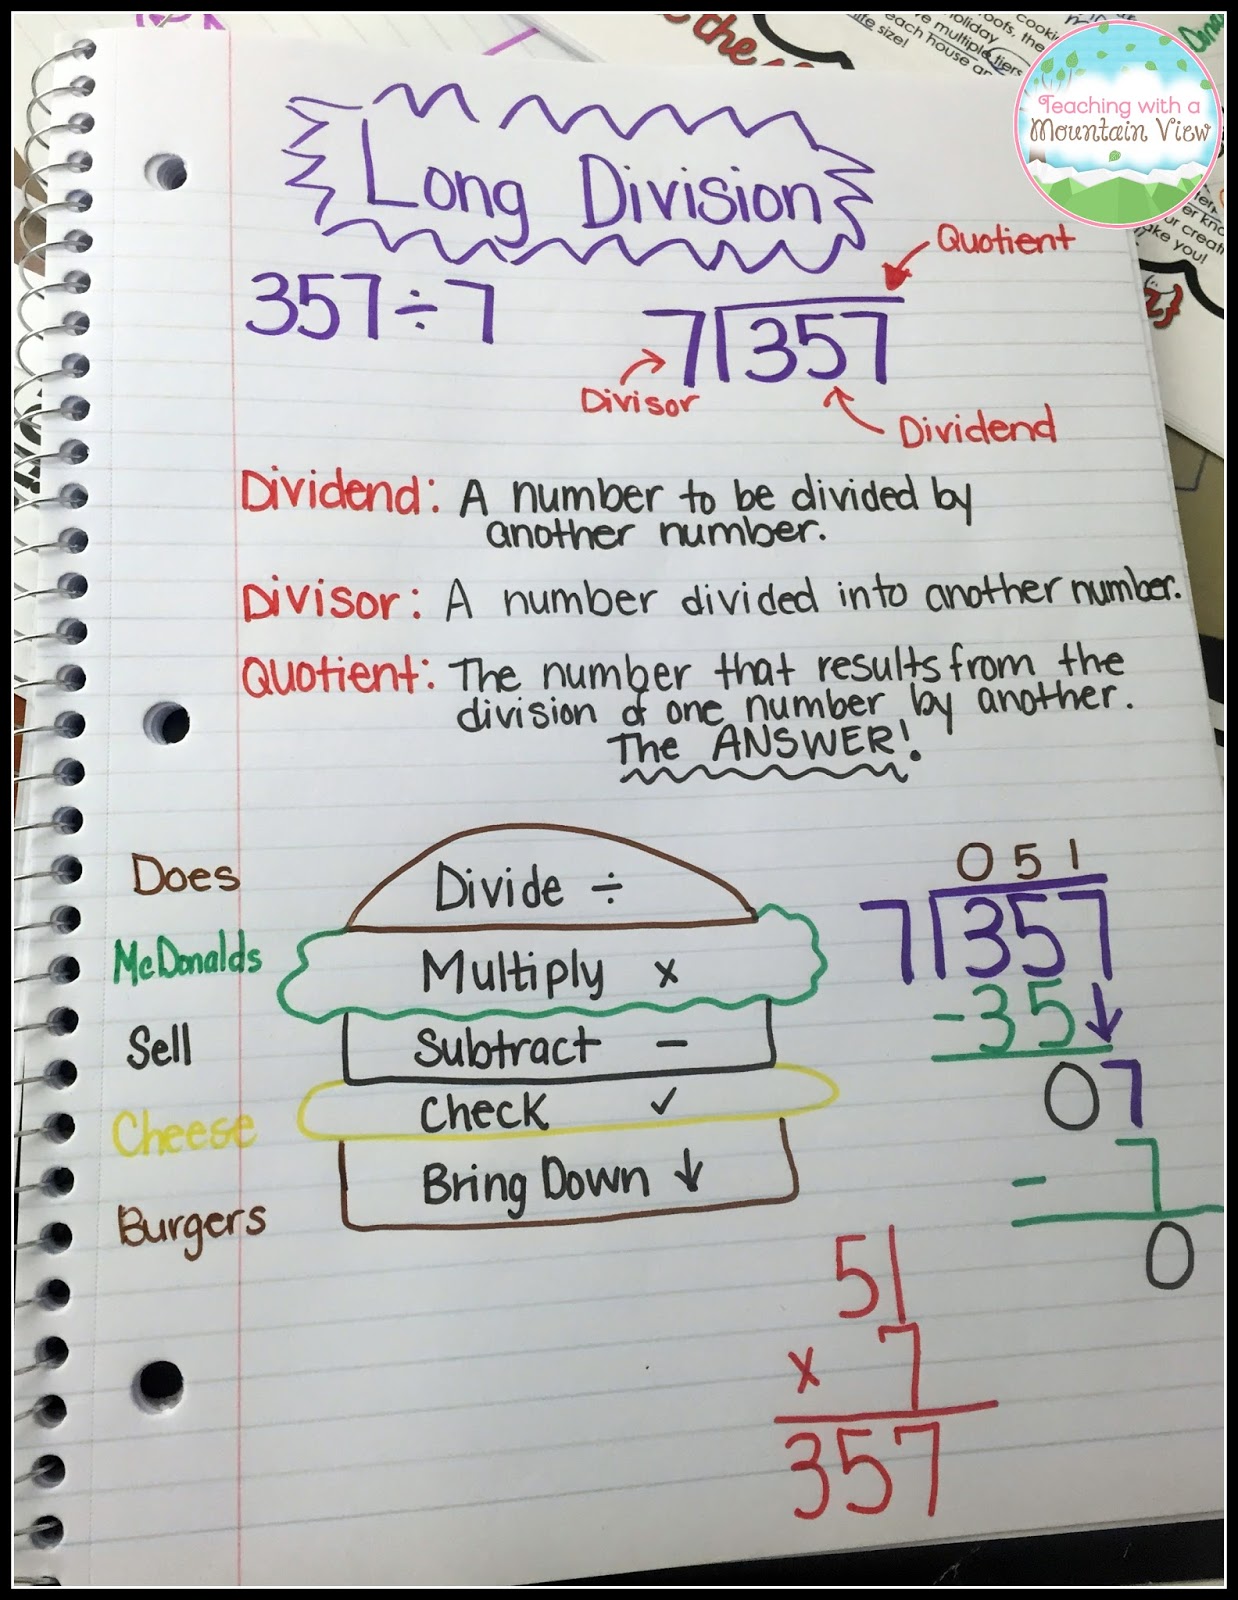 Division Anchor Chart 5th Grade